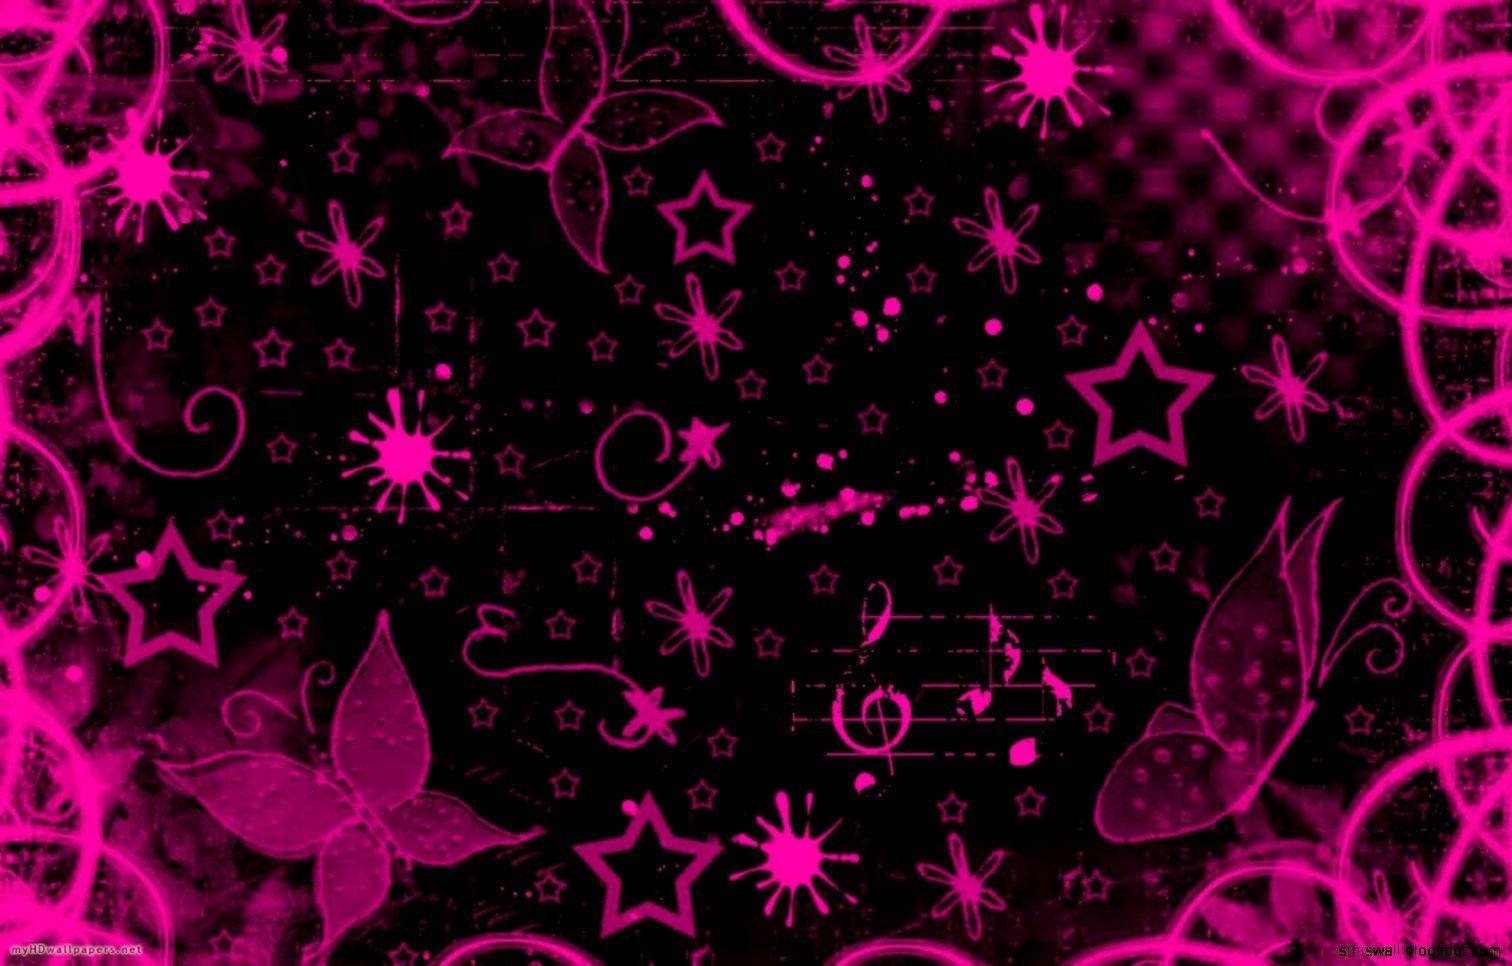 Free Neon Pink Aesthetic Wallpaper Downloads, Neon Pink Aesthetic Wallpaper for FREE